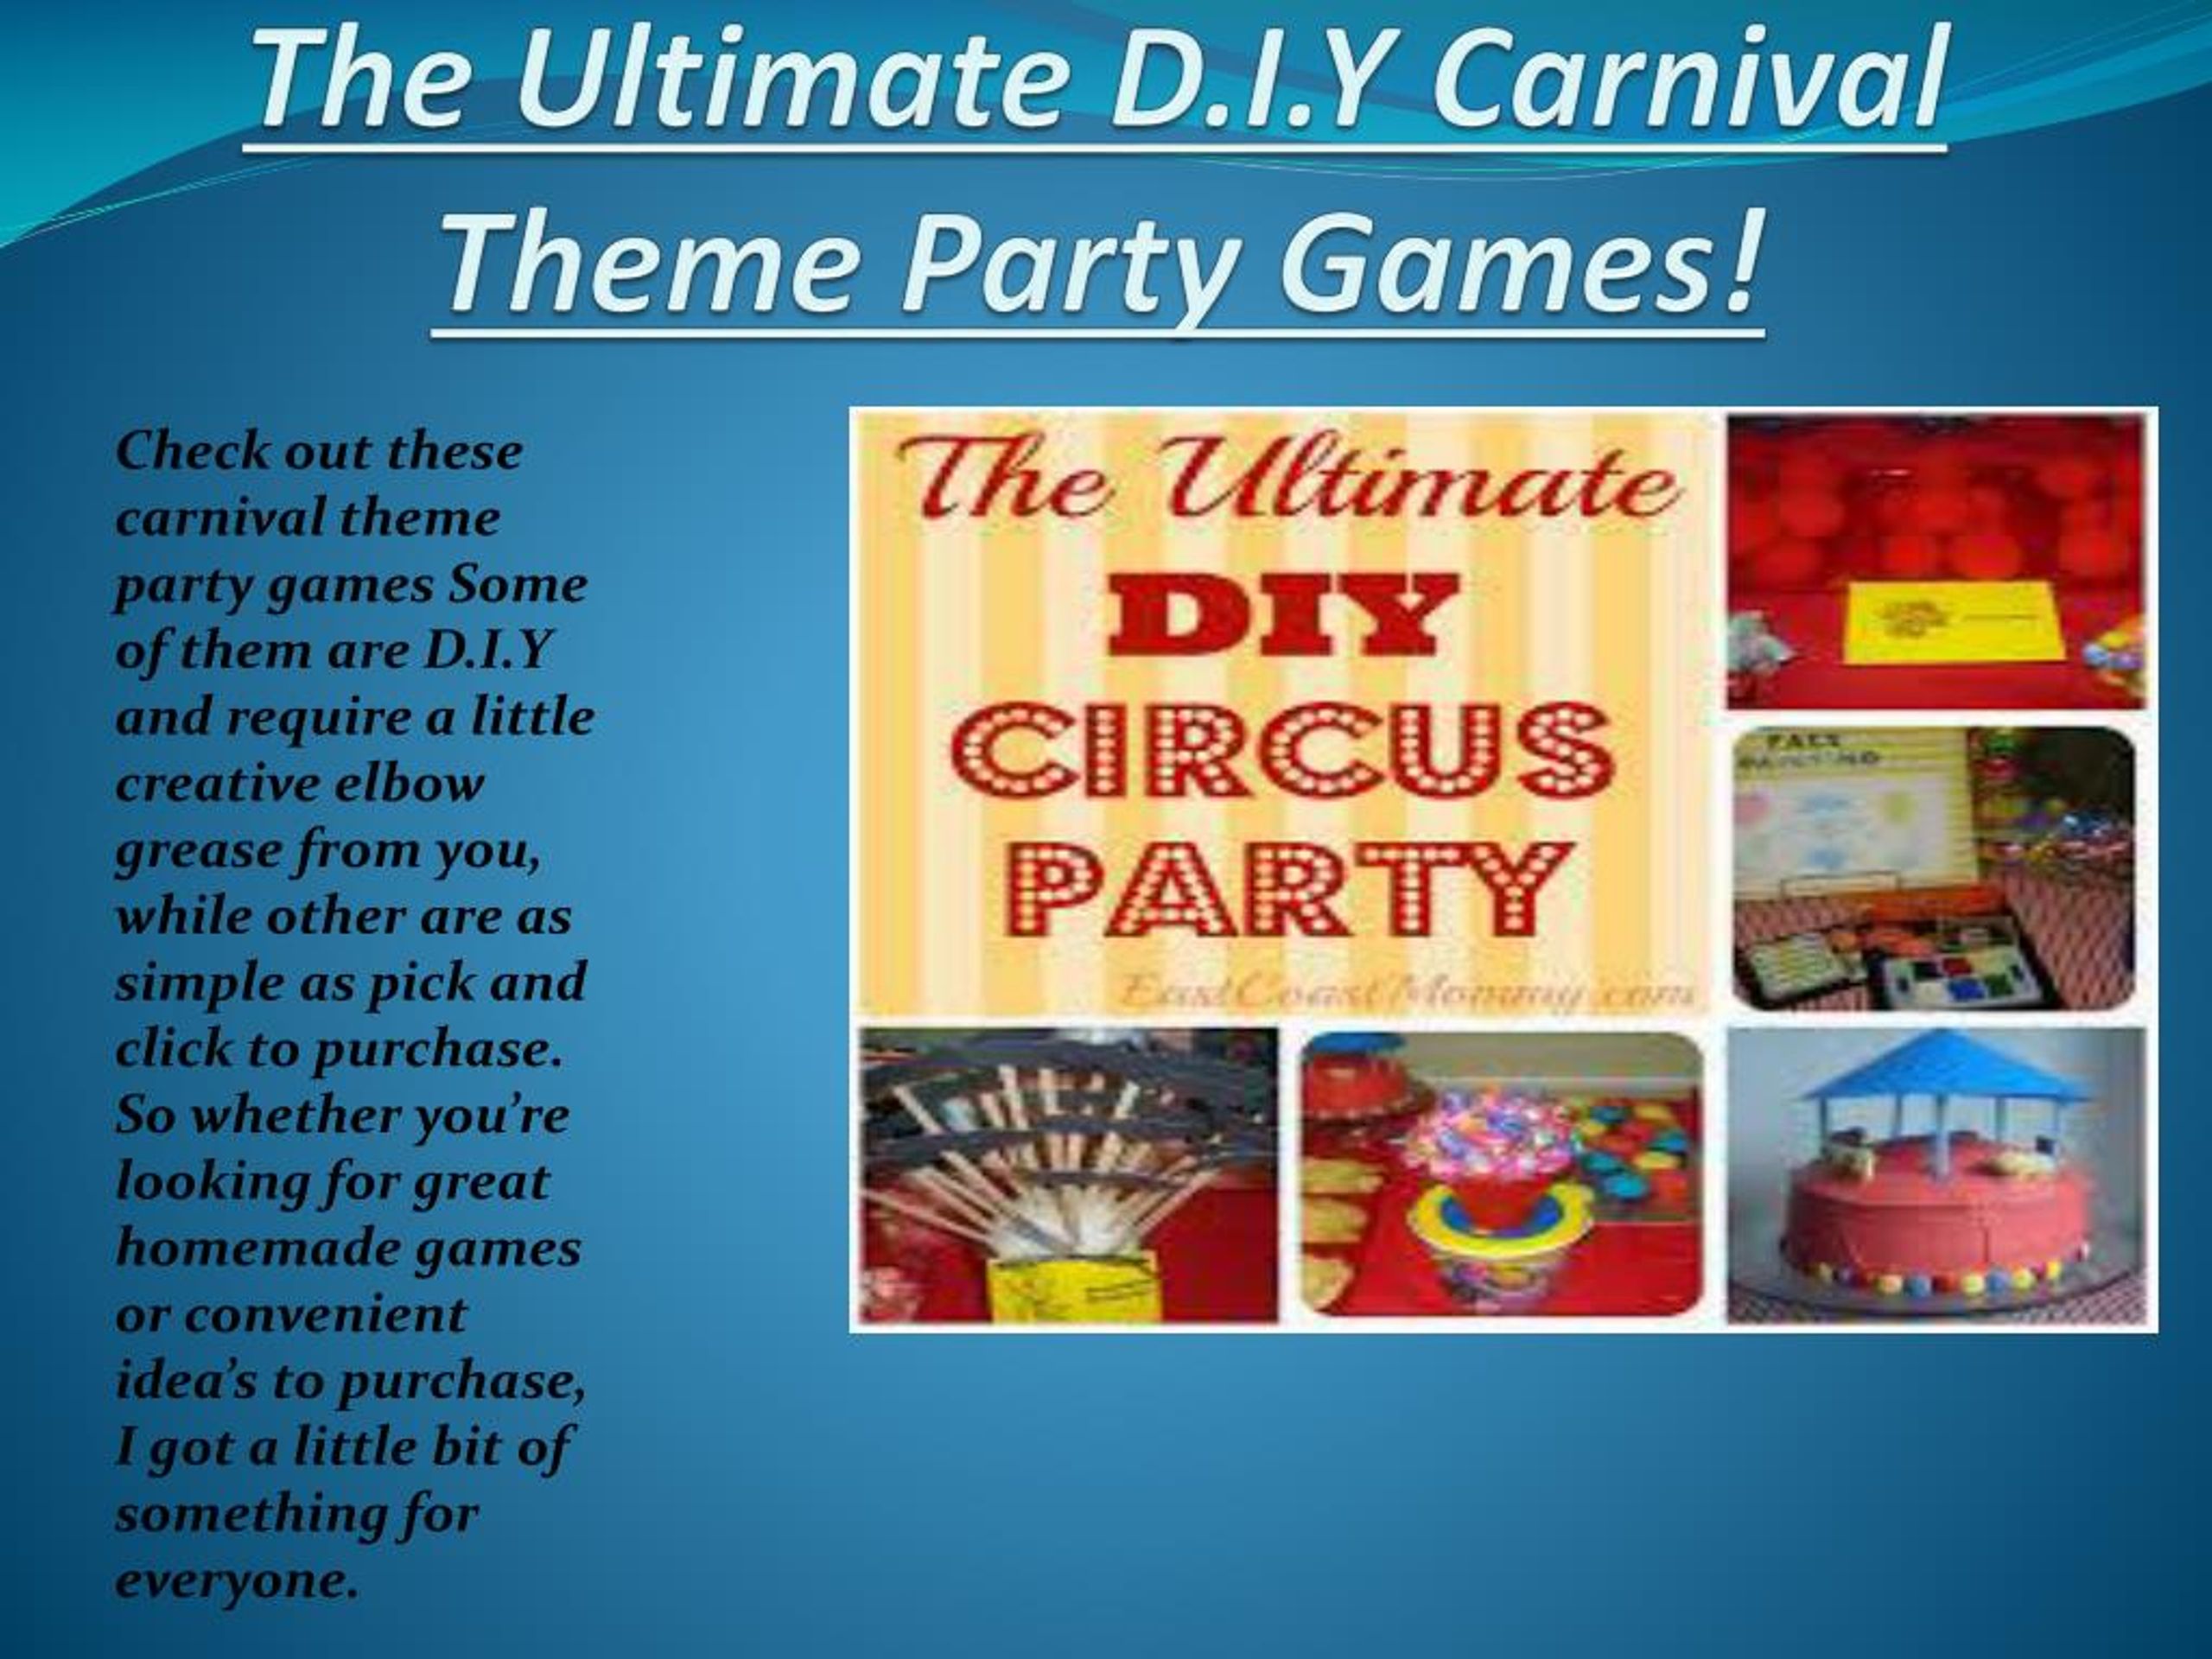 https://image4.slideserve.com/7292381/the-ultimate-d-i-y-carnival-theme-party-games-l.jpg